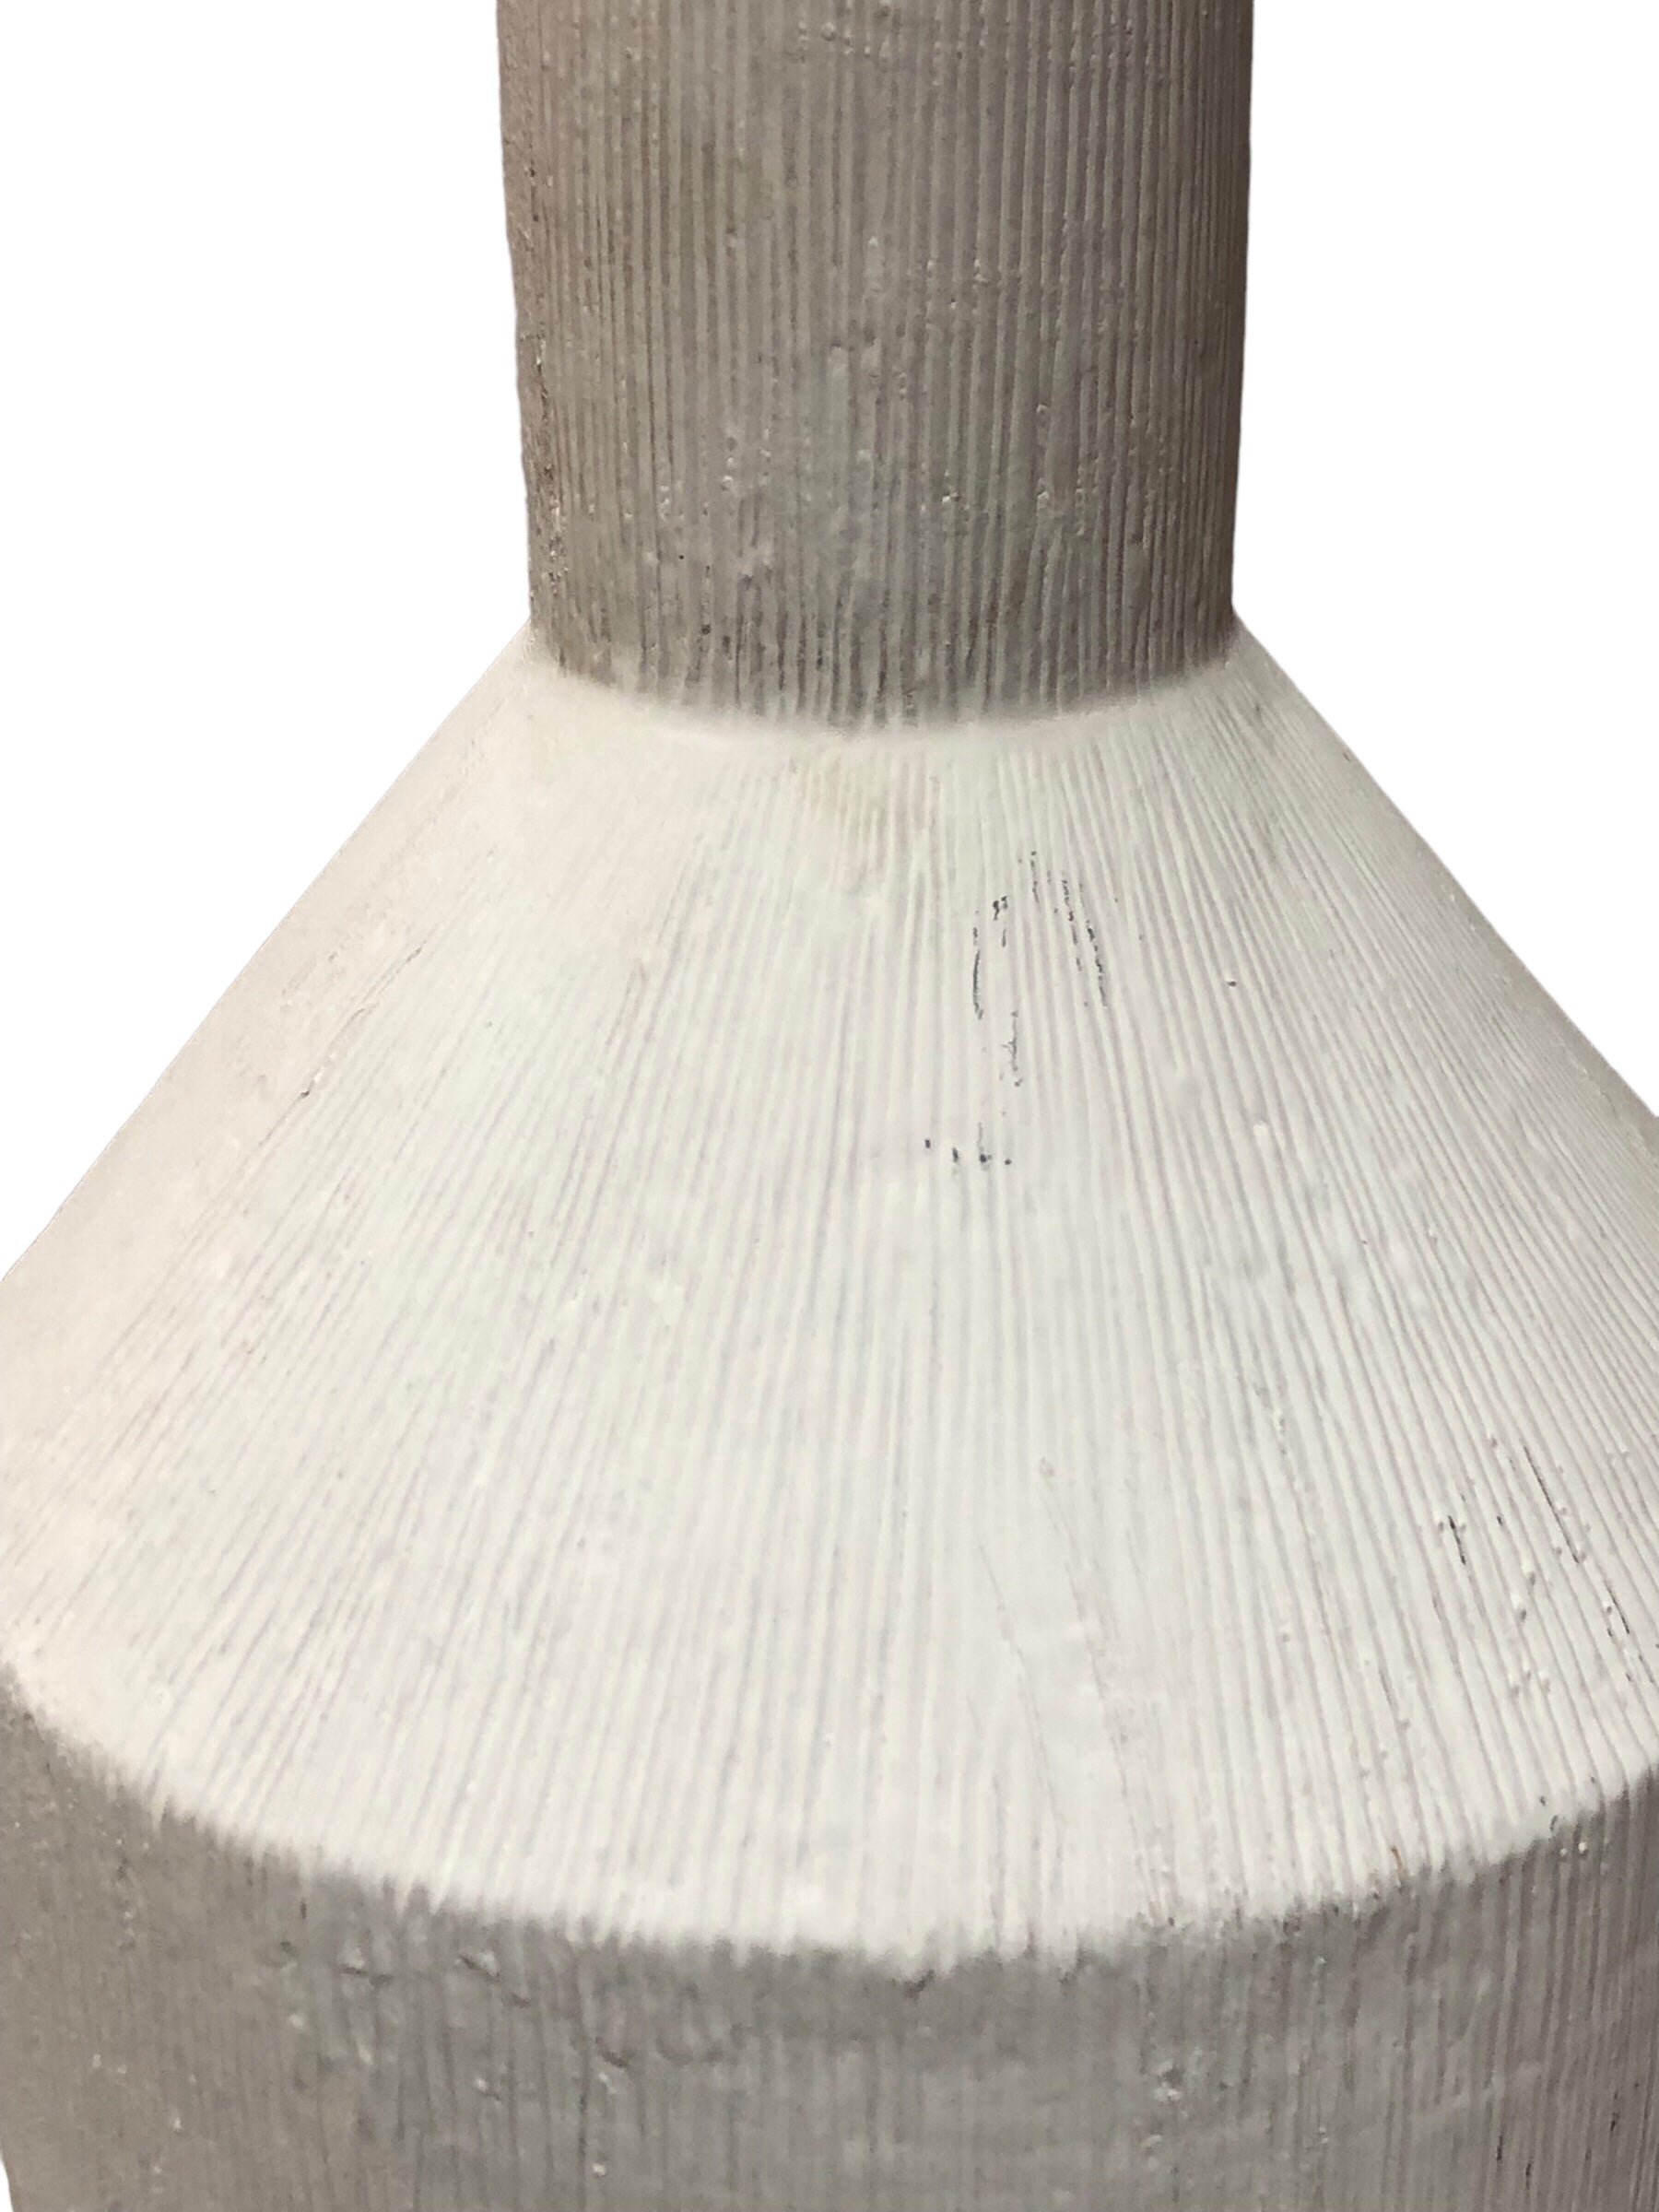 White Vase / Textured